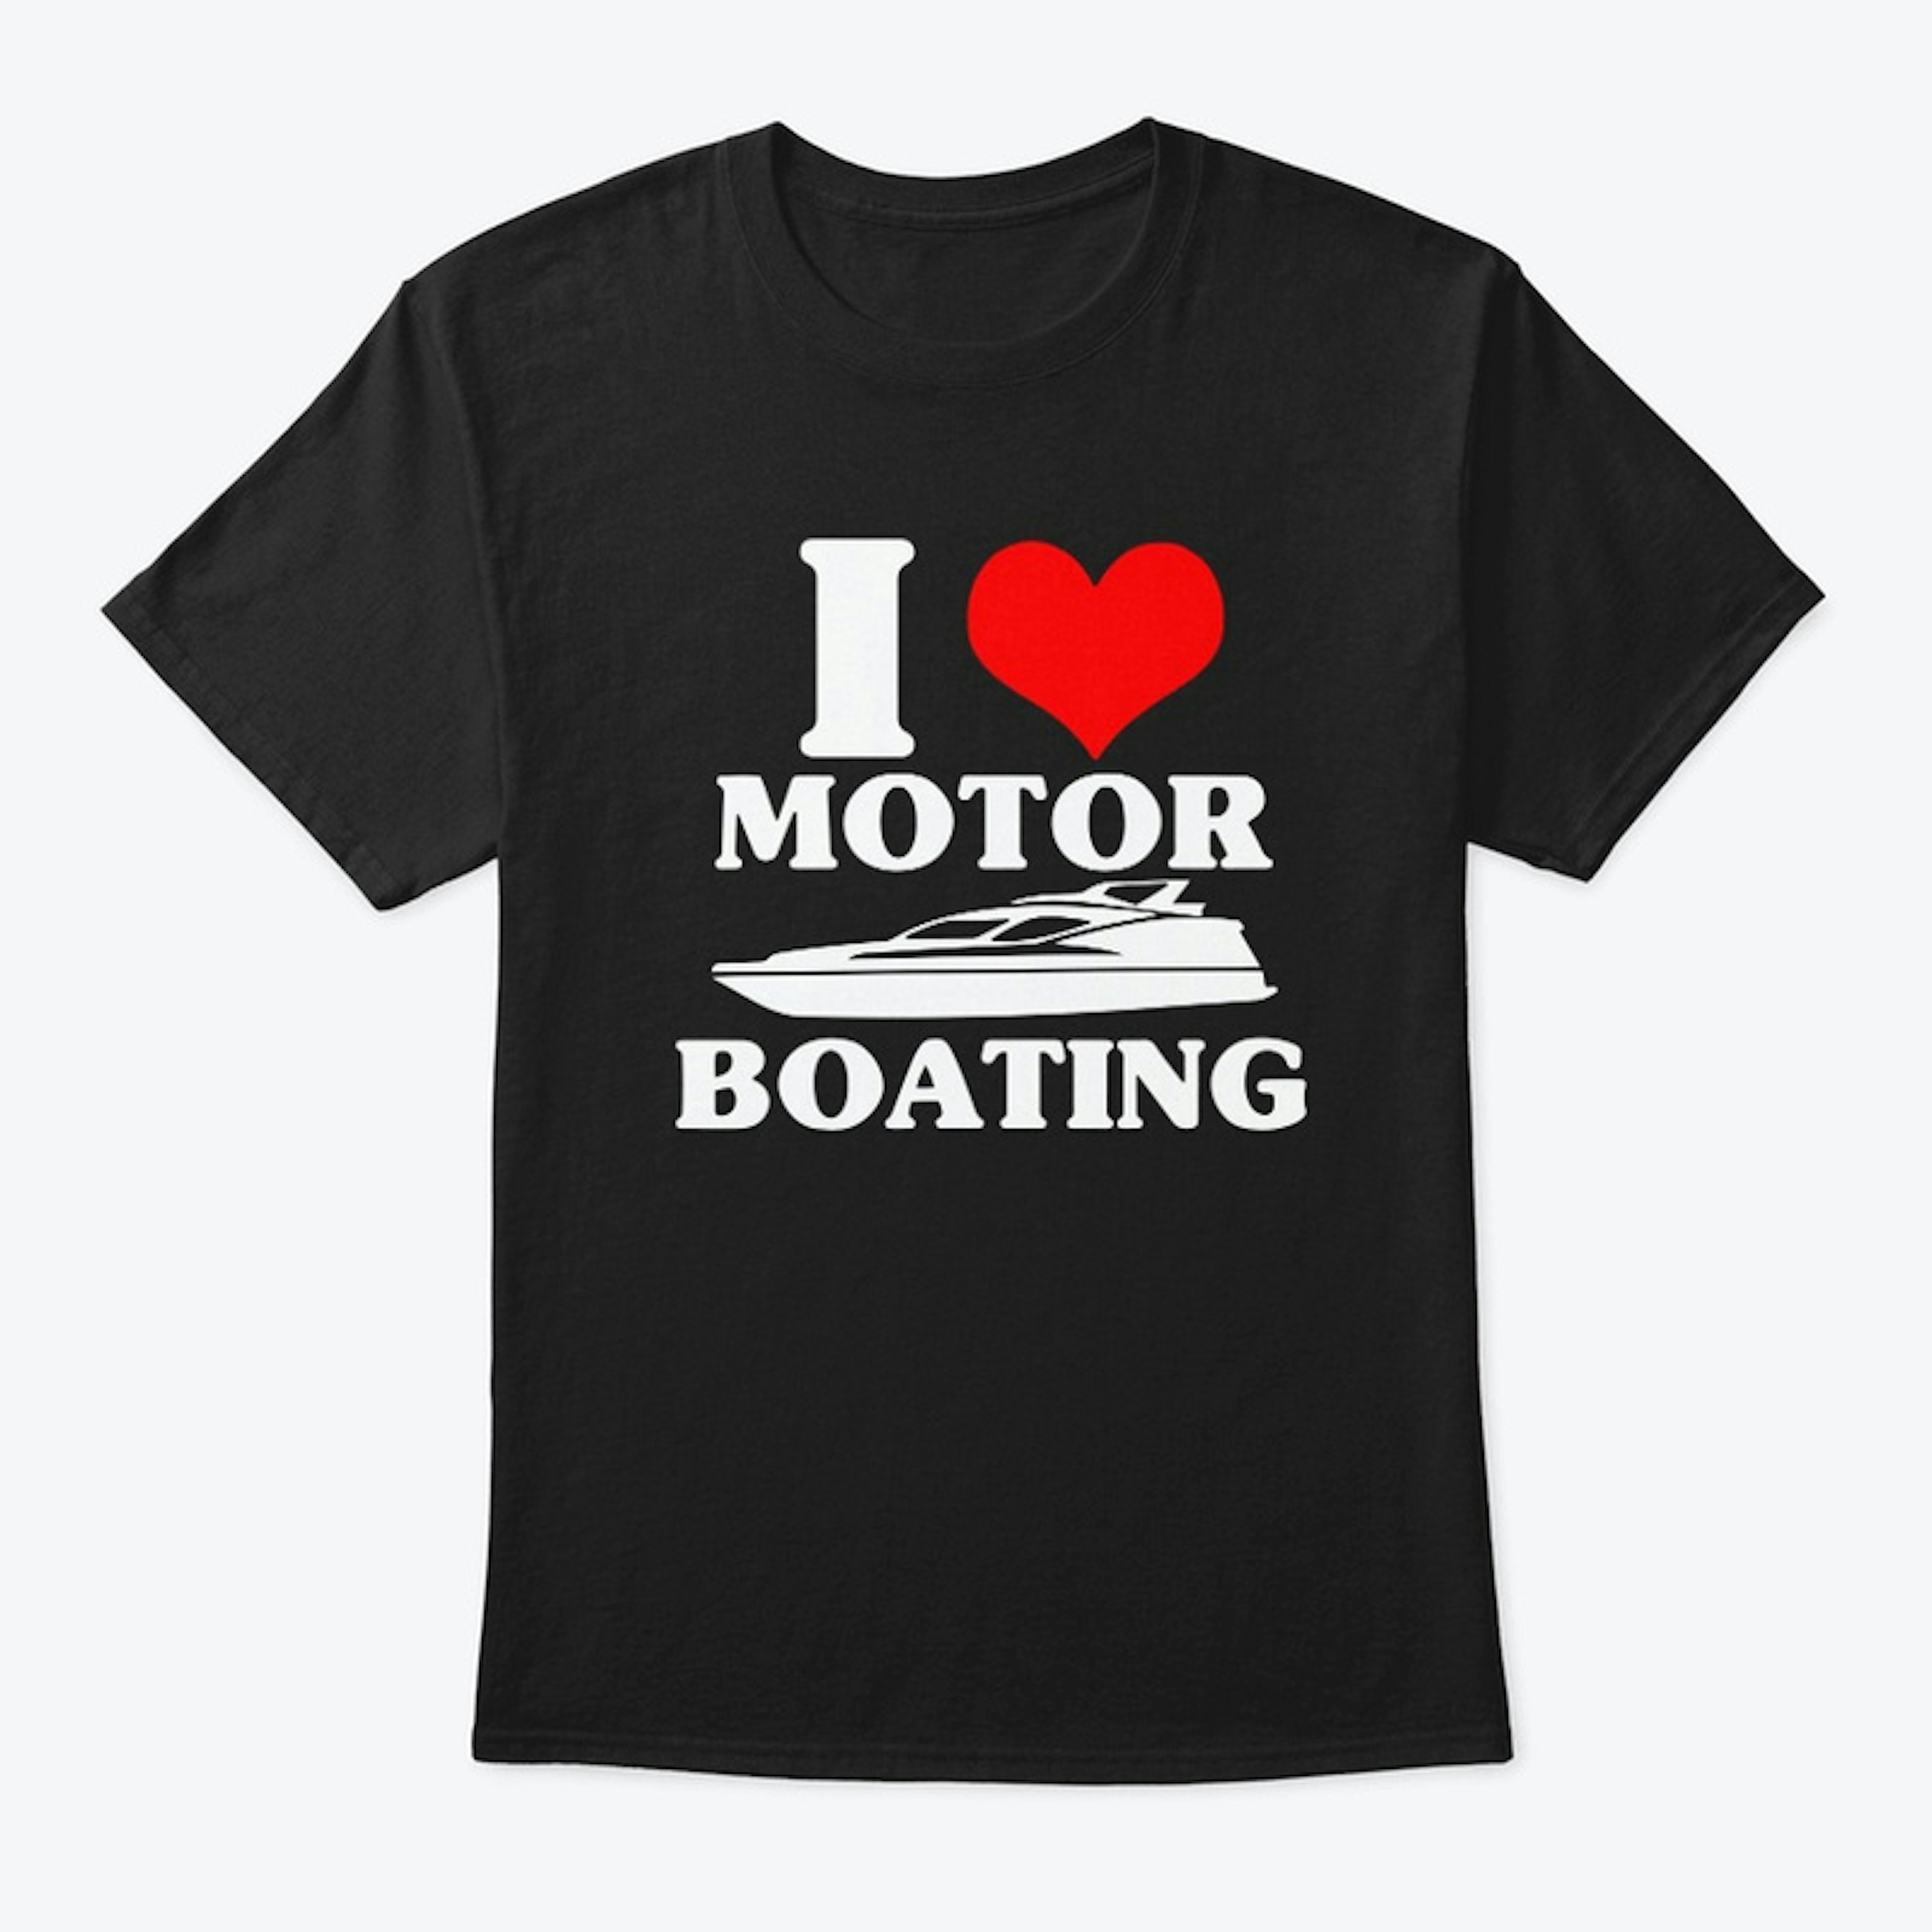 Boating T-shirt